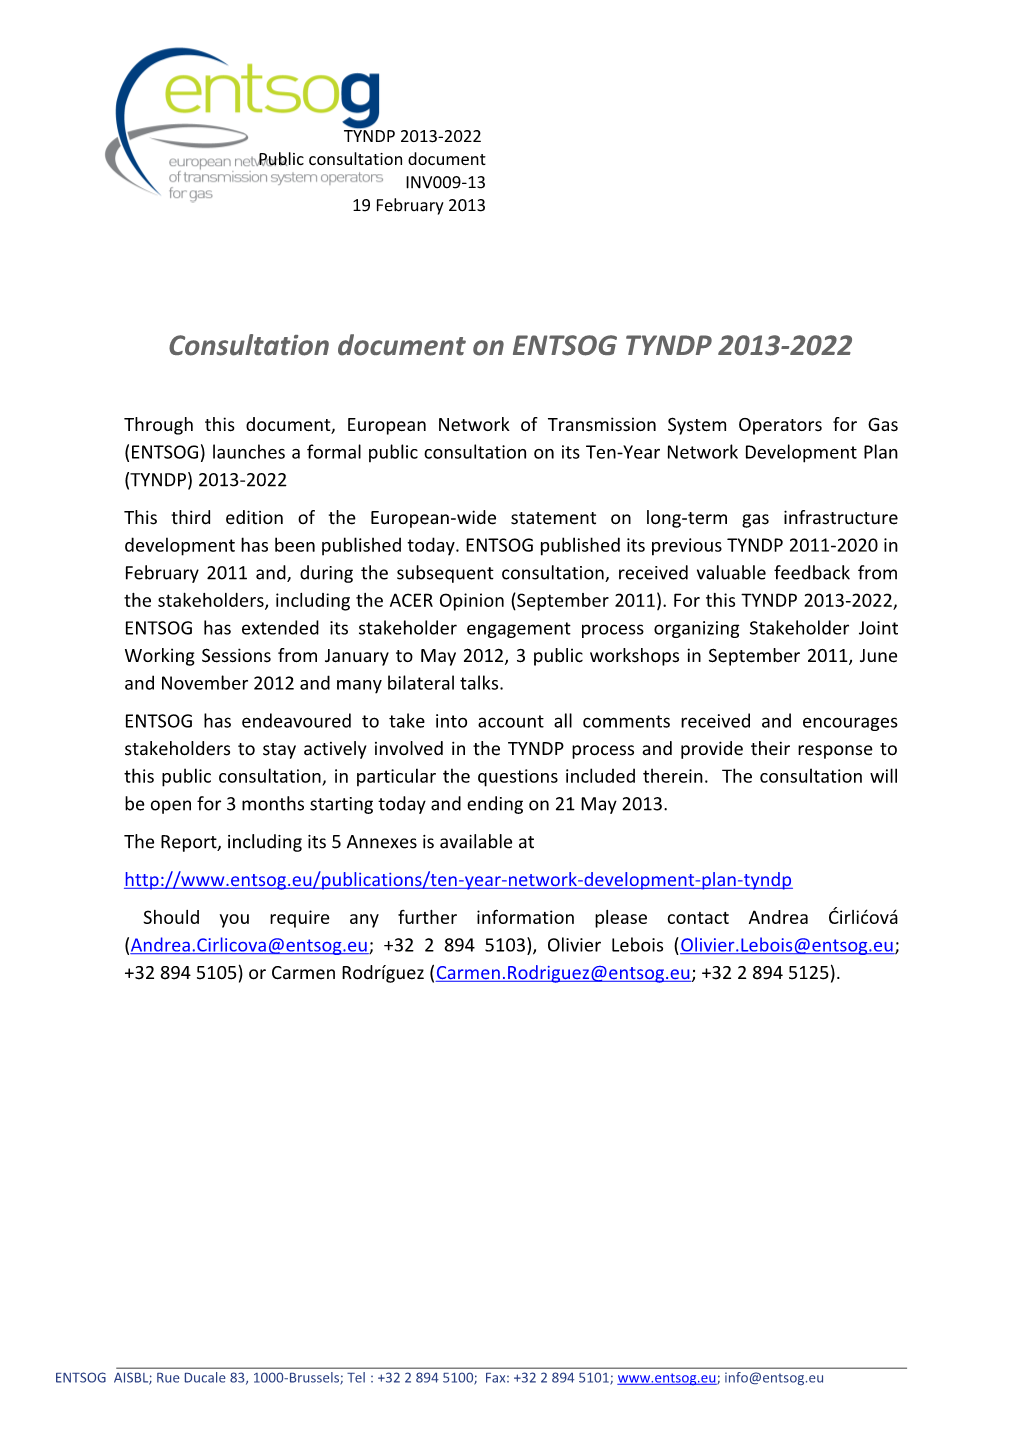 ENTSOG TYNDP 2013-2022 Consultation Document